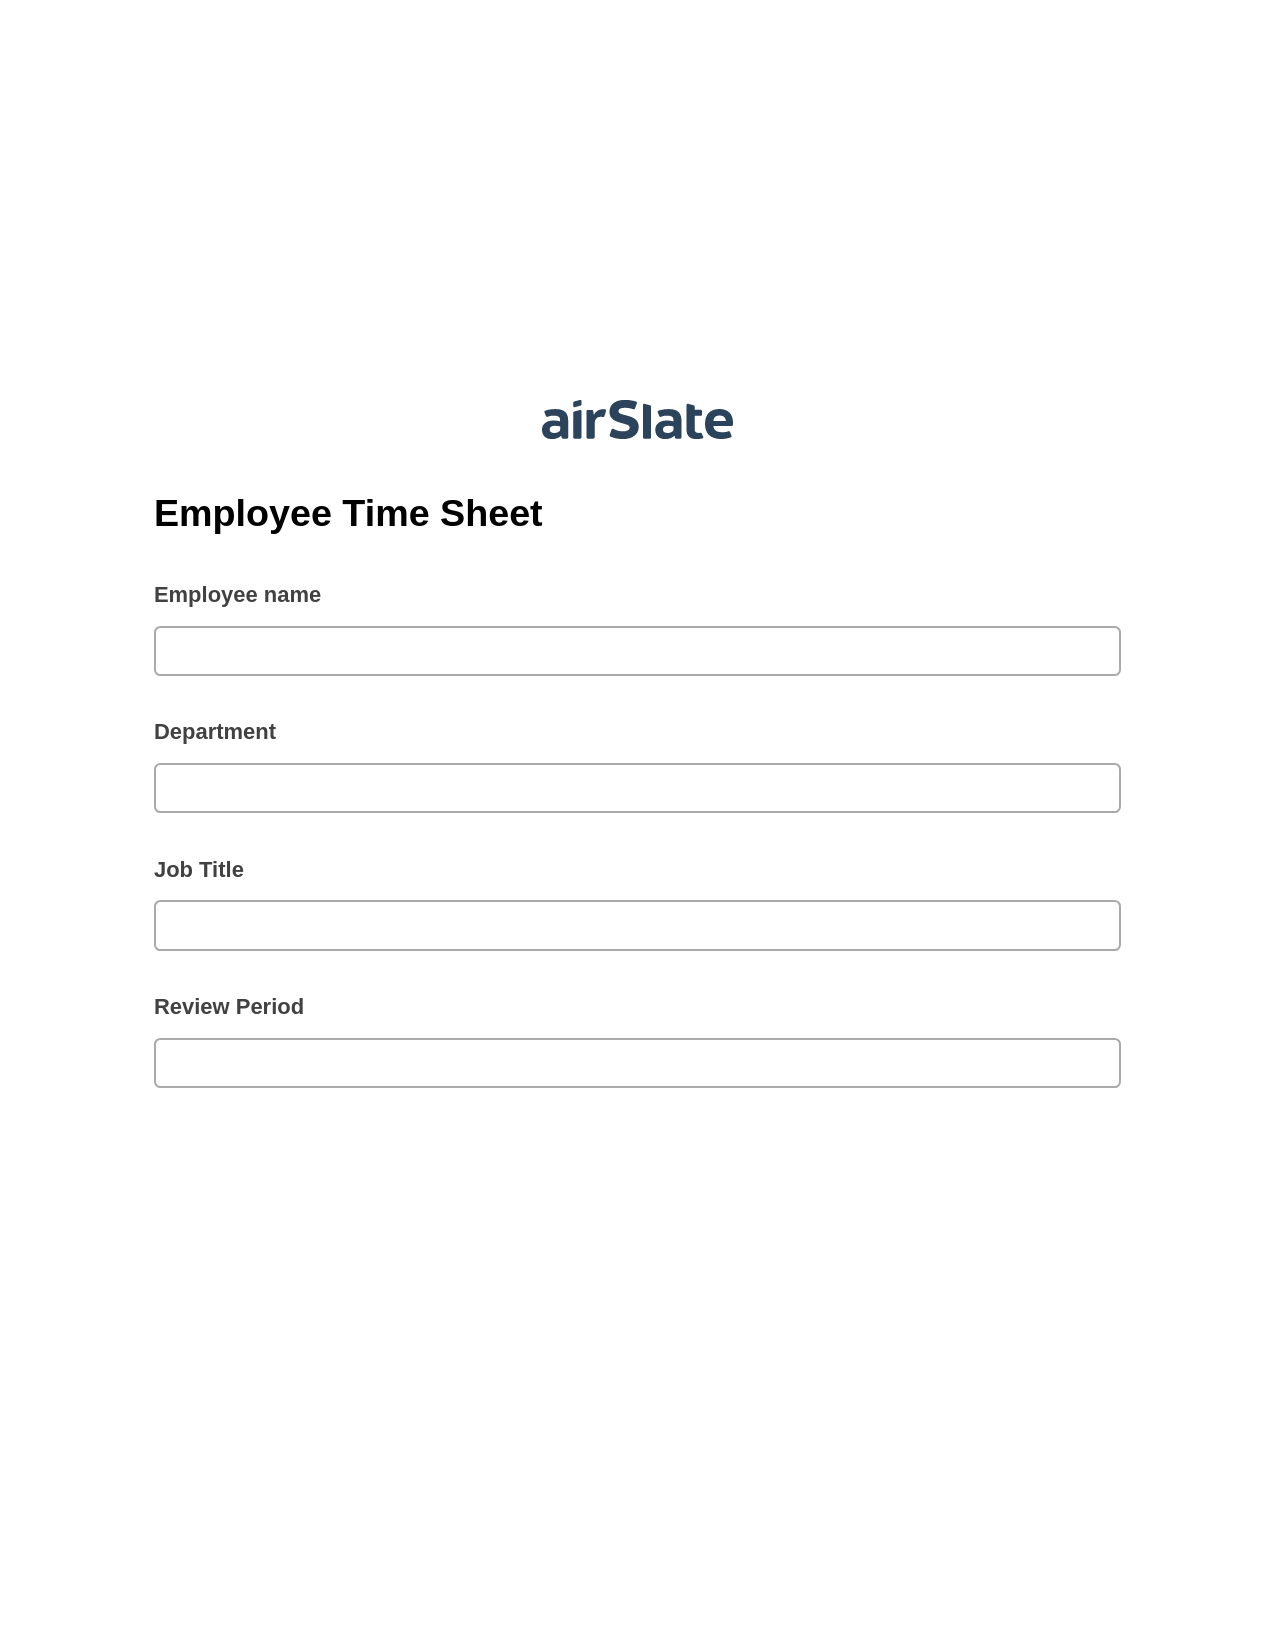 Multirole Employee Time Sheet Pre-fill from Google Sheets Bot, Update Audit Trail Bot, Export to WebMerge Bot